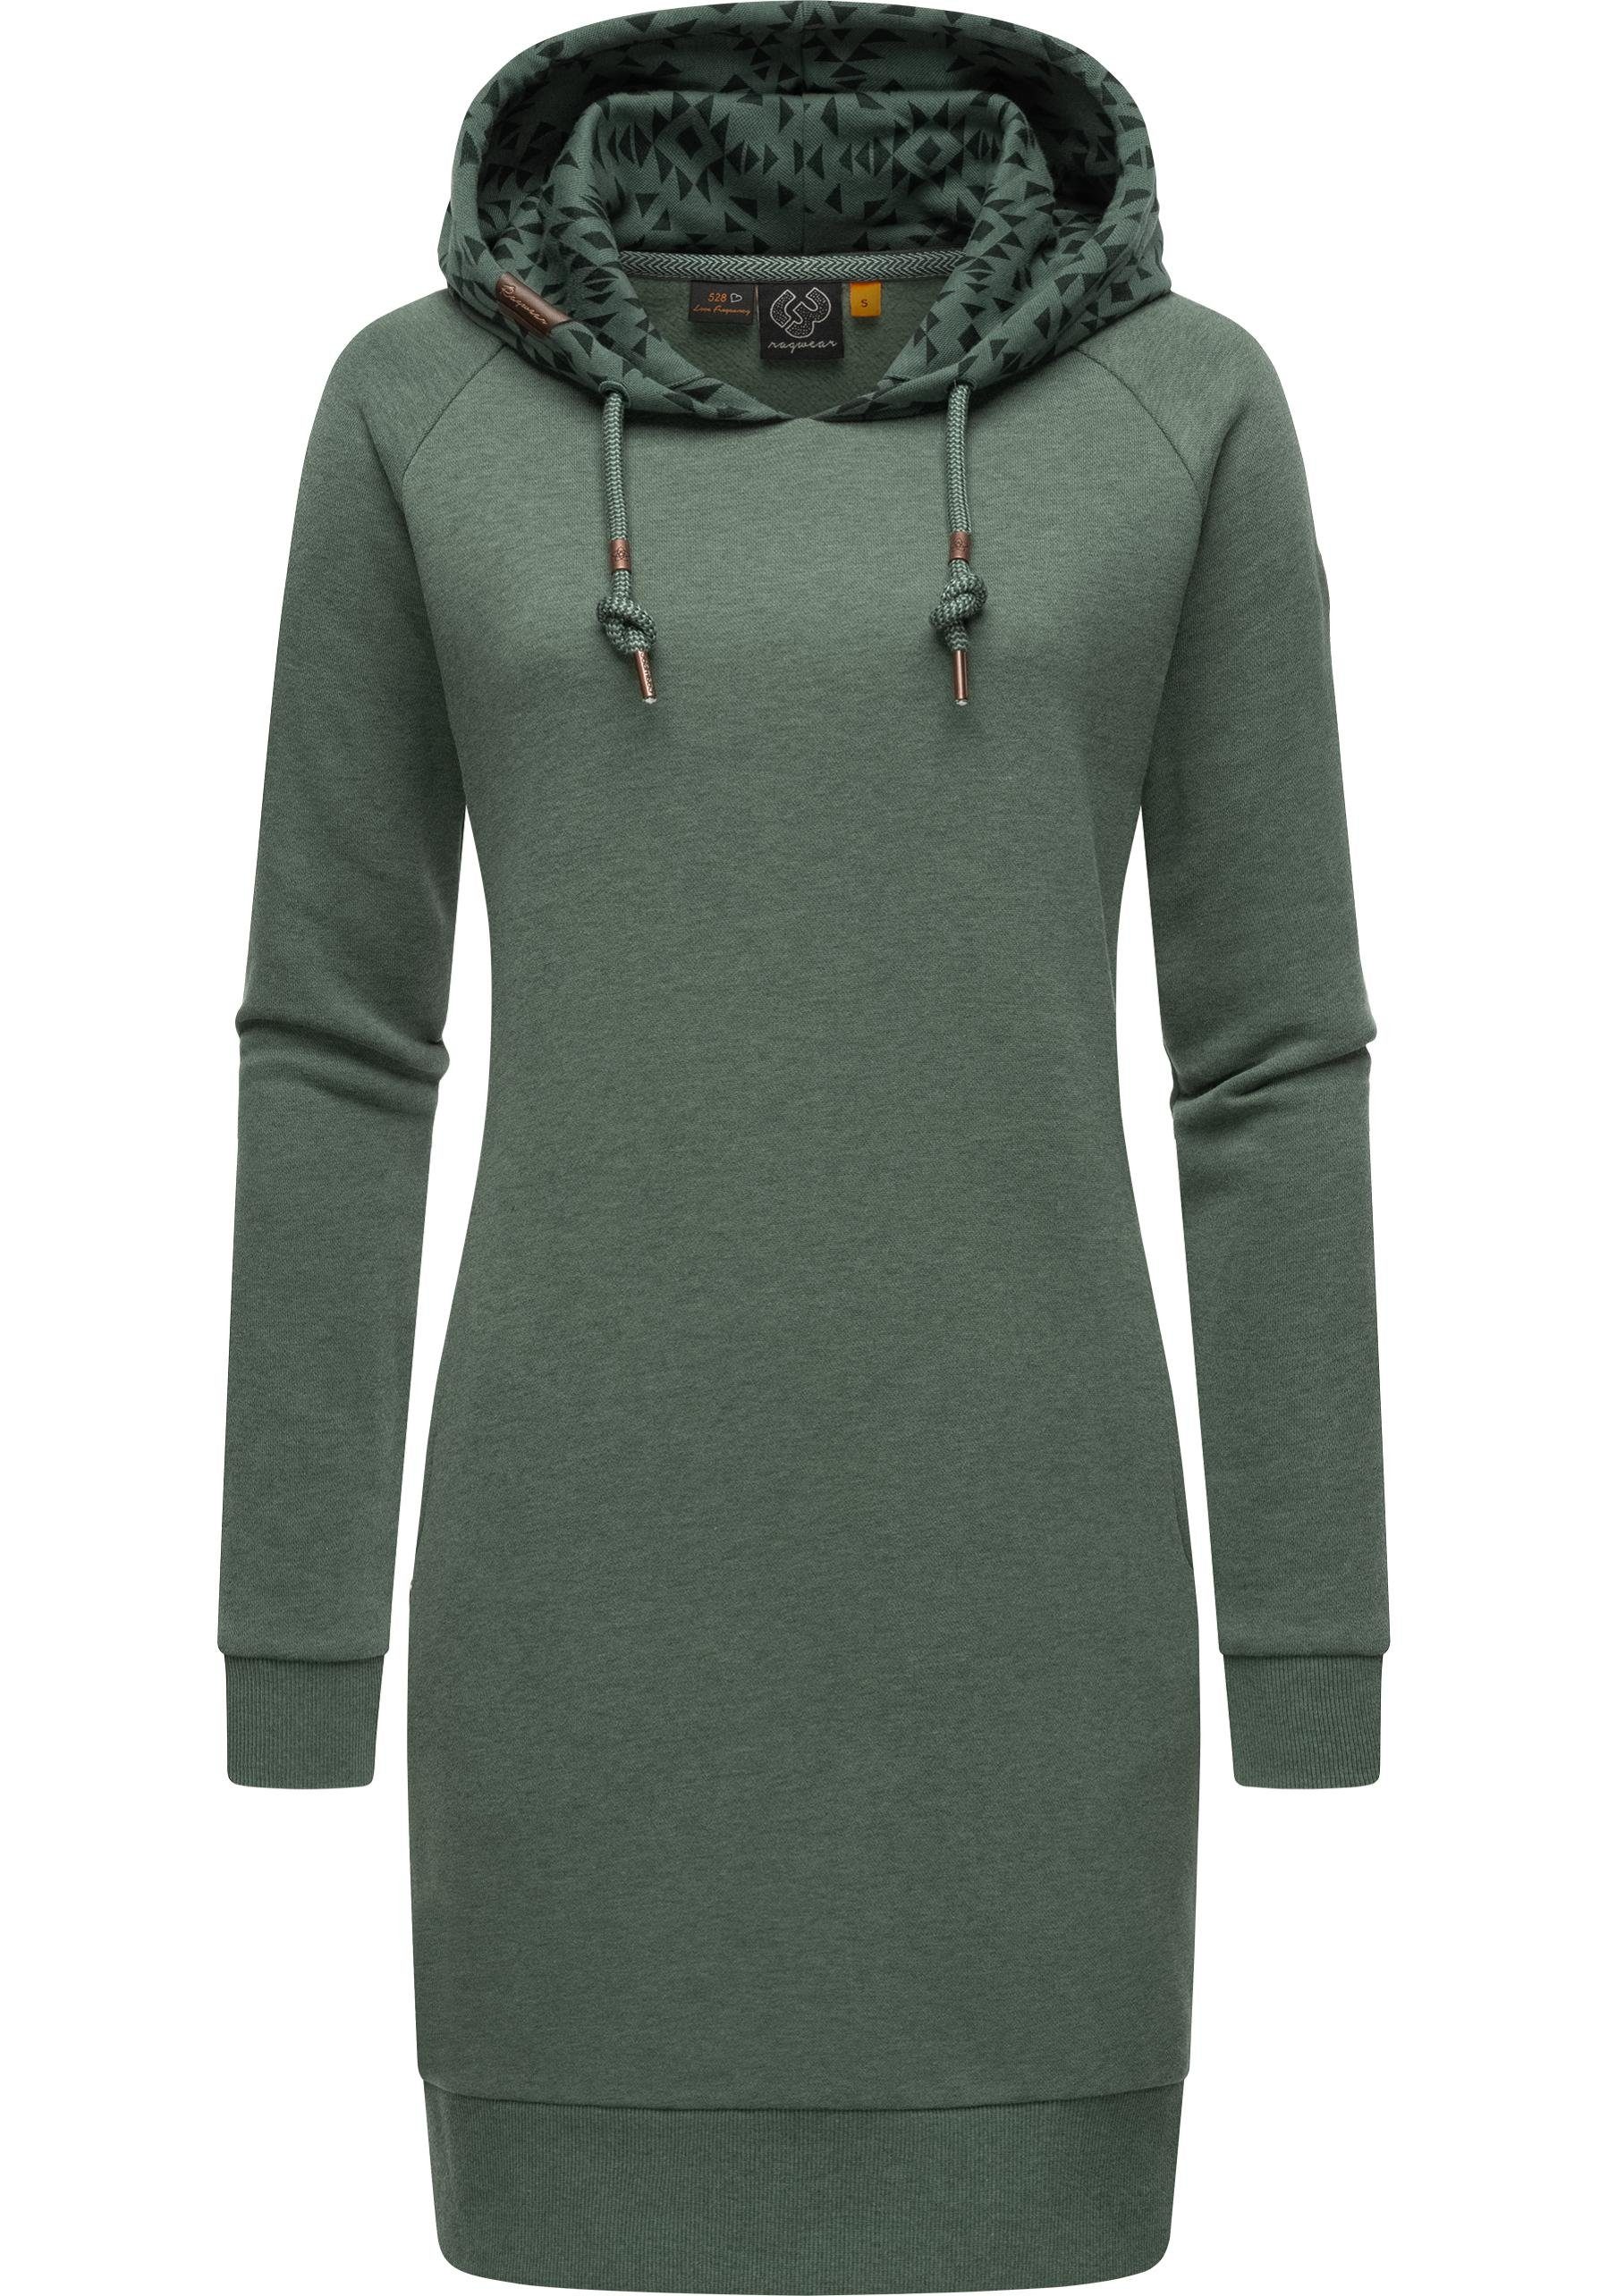 Ragwear Sweatkleid Bessi Langärmliges Baumwoll Kleid mit Printmuster-Kapuze